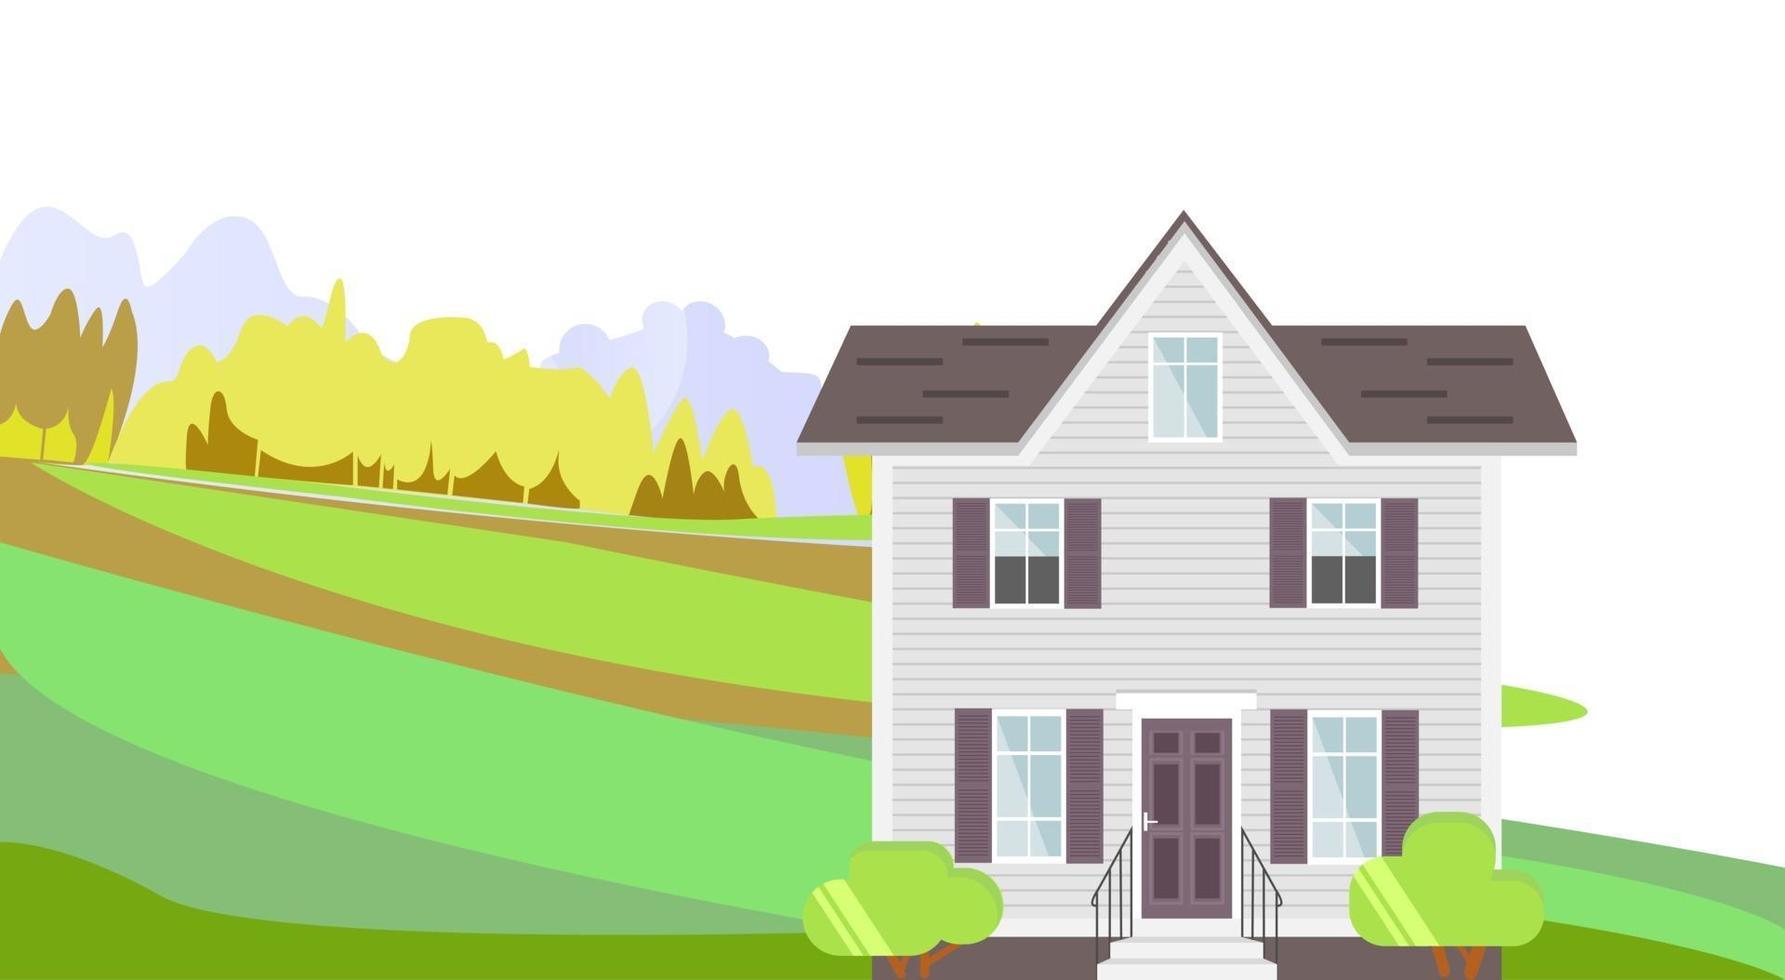 Two Storey House Flat Design Landscape Vector Architecture Illustration